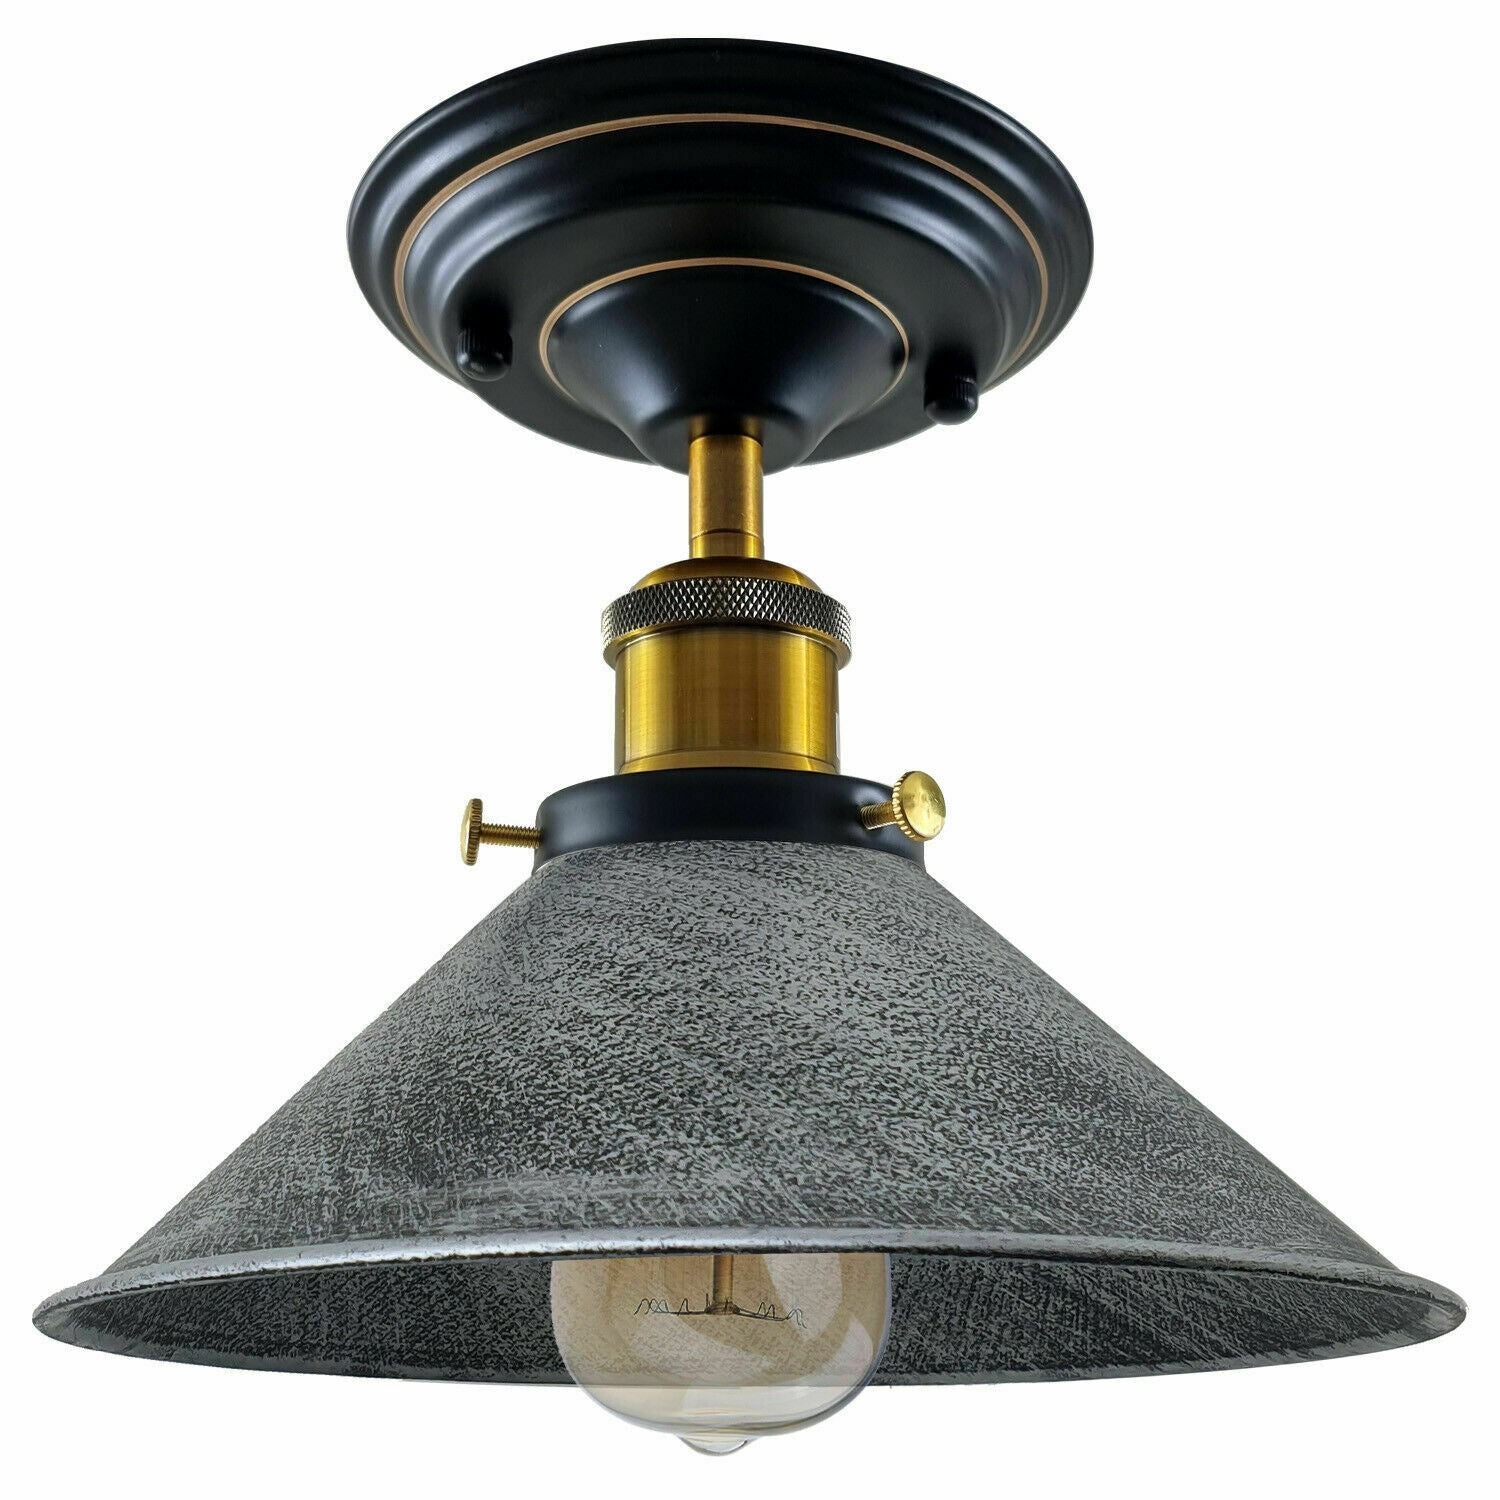 Vintage Industrial Retro Metal Indoor Ceiling Light Flush Mount Retro Cone Shade Lamp UK~1229 - LEDSone UK Ltd